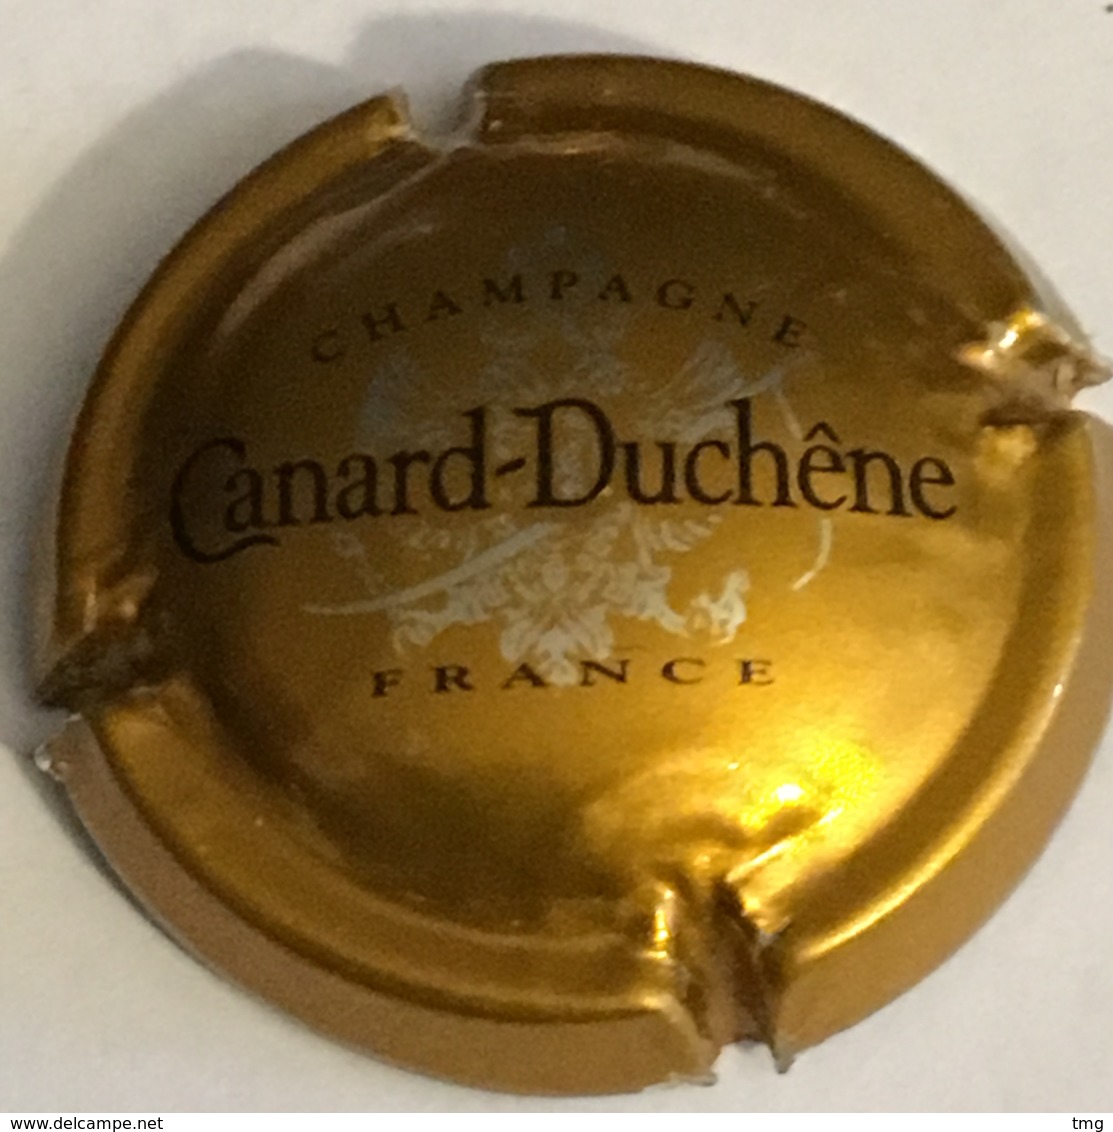 4 - Capsule De Champagne N°75 X2 - Canard-Duchêne, Bronze (petites Lettres & Lettres épaisses) - Canard Duchêne